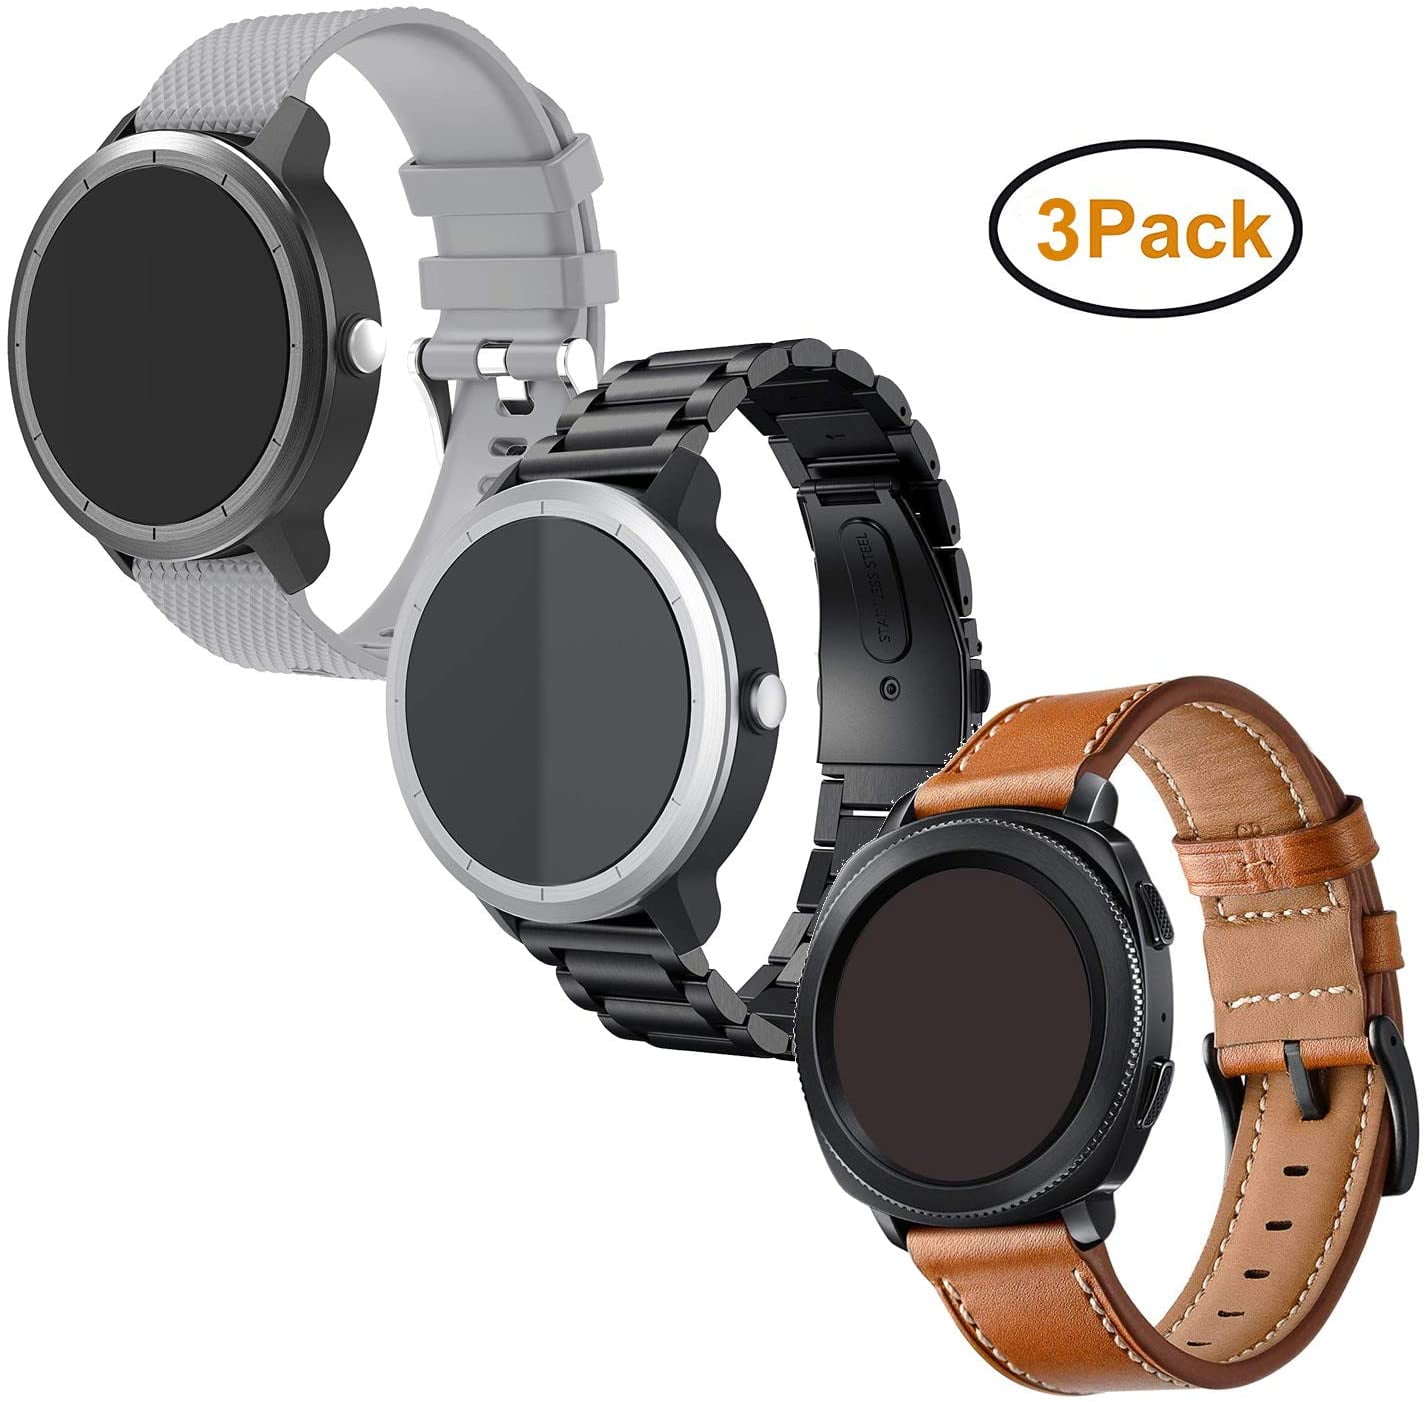 Anrir Garmin Vivoactive Watch Band, 20mm Leather Band+Silicone Band for Garmin Forerunner | Walmart Canada